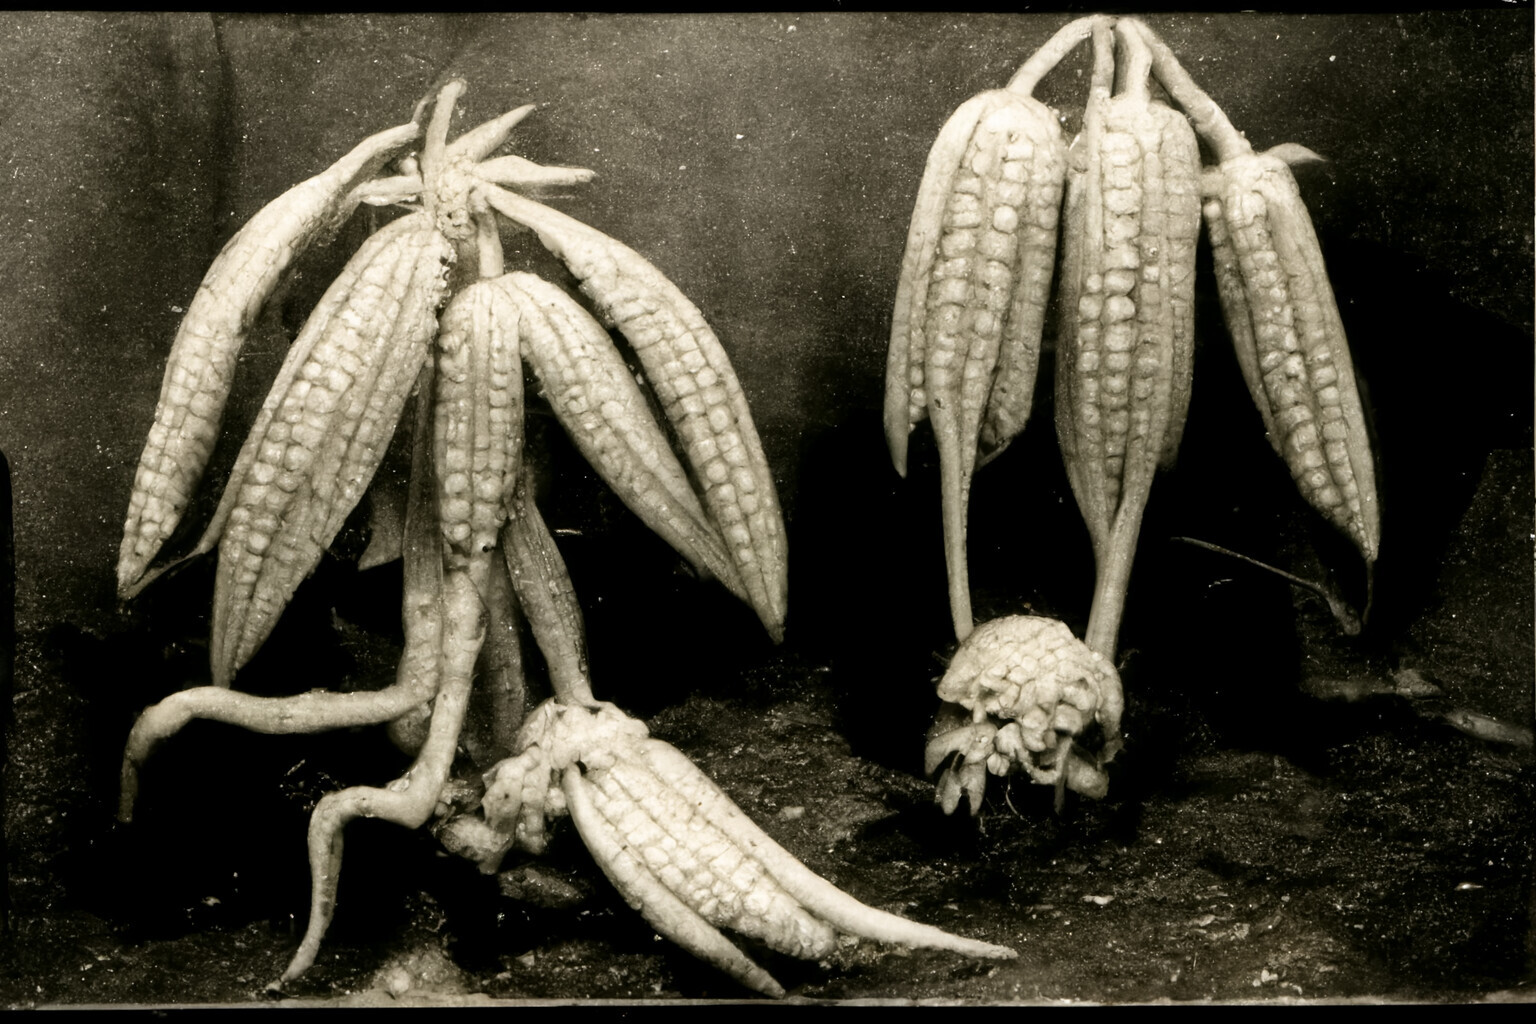 Corn Bushes
c. 1913
Photograph, ambrotype